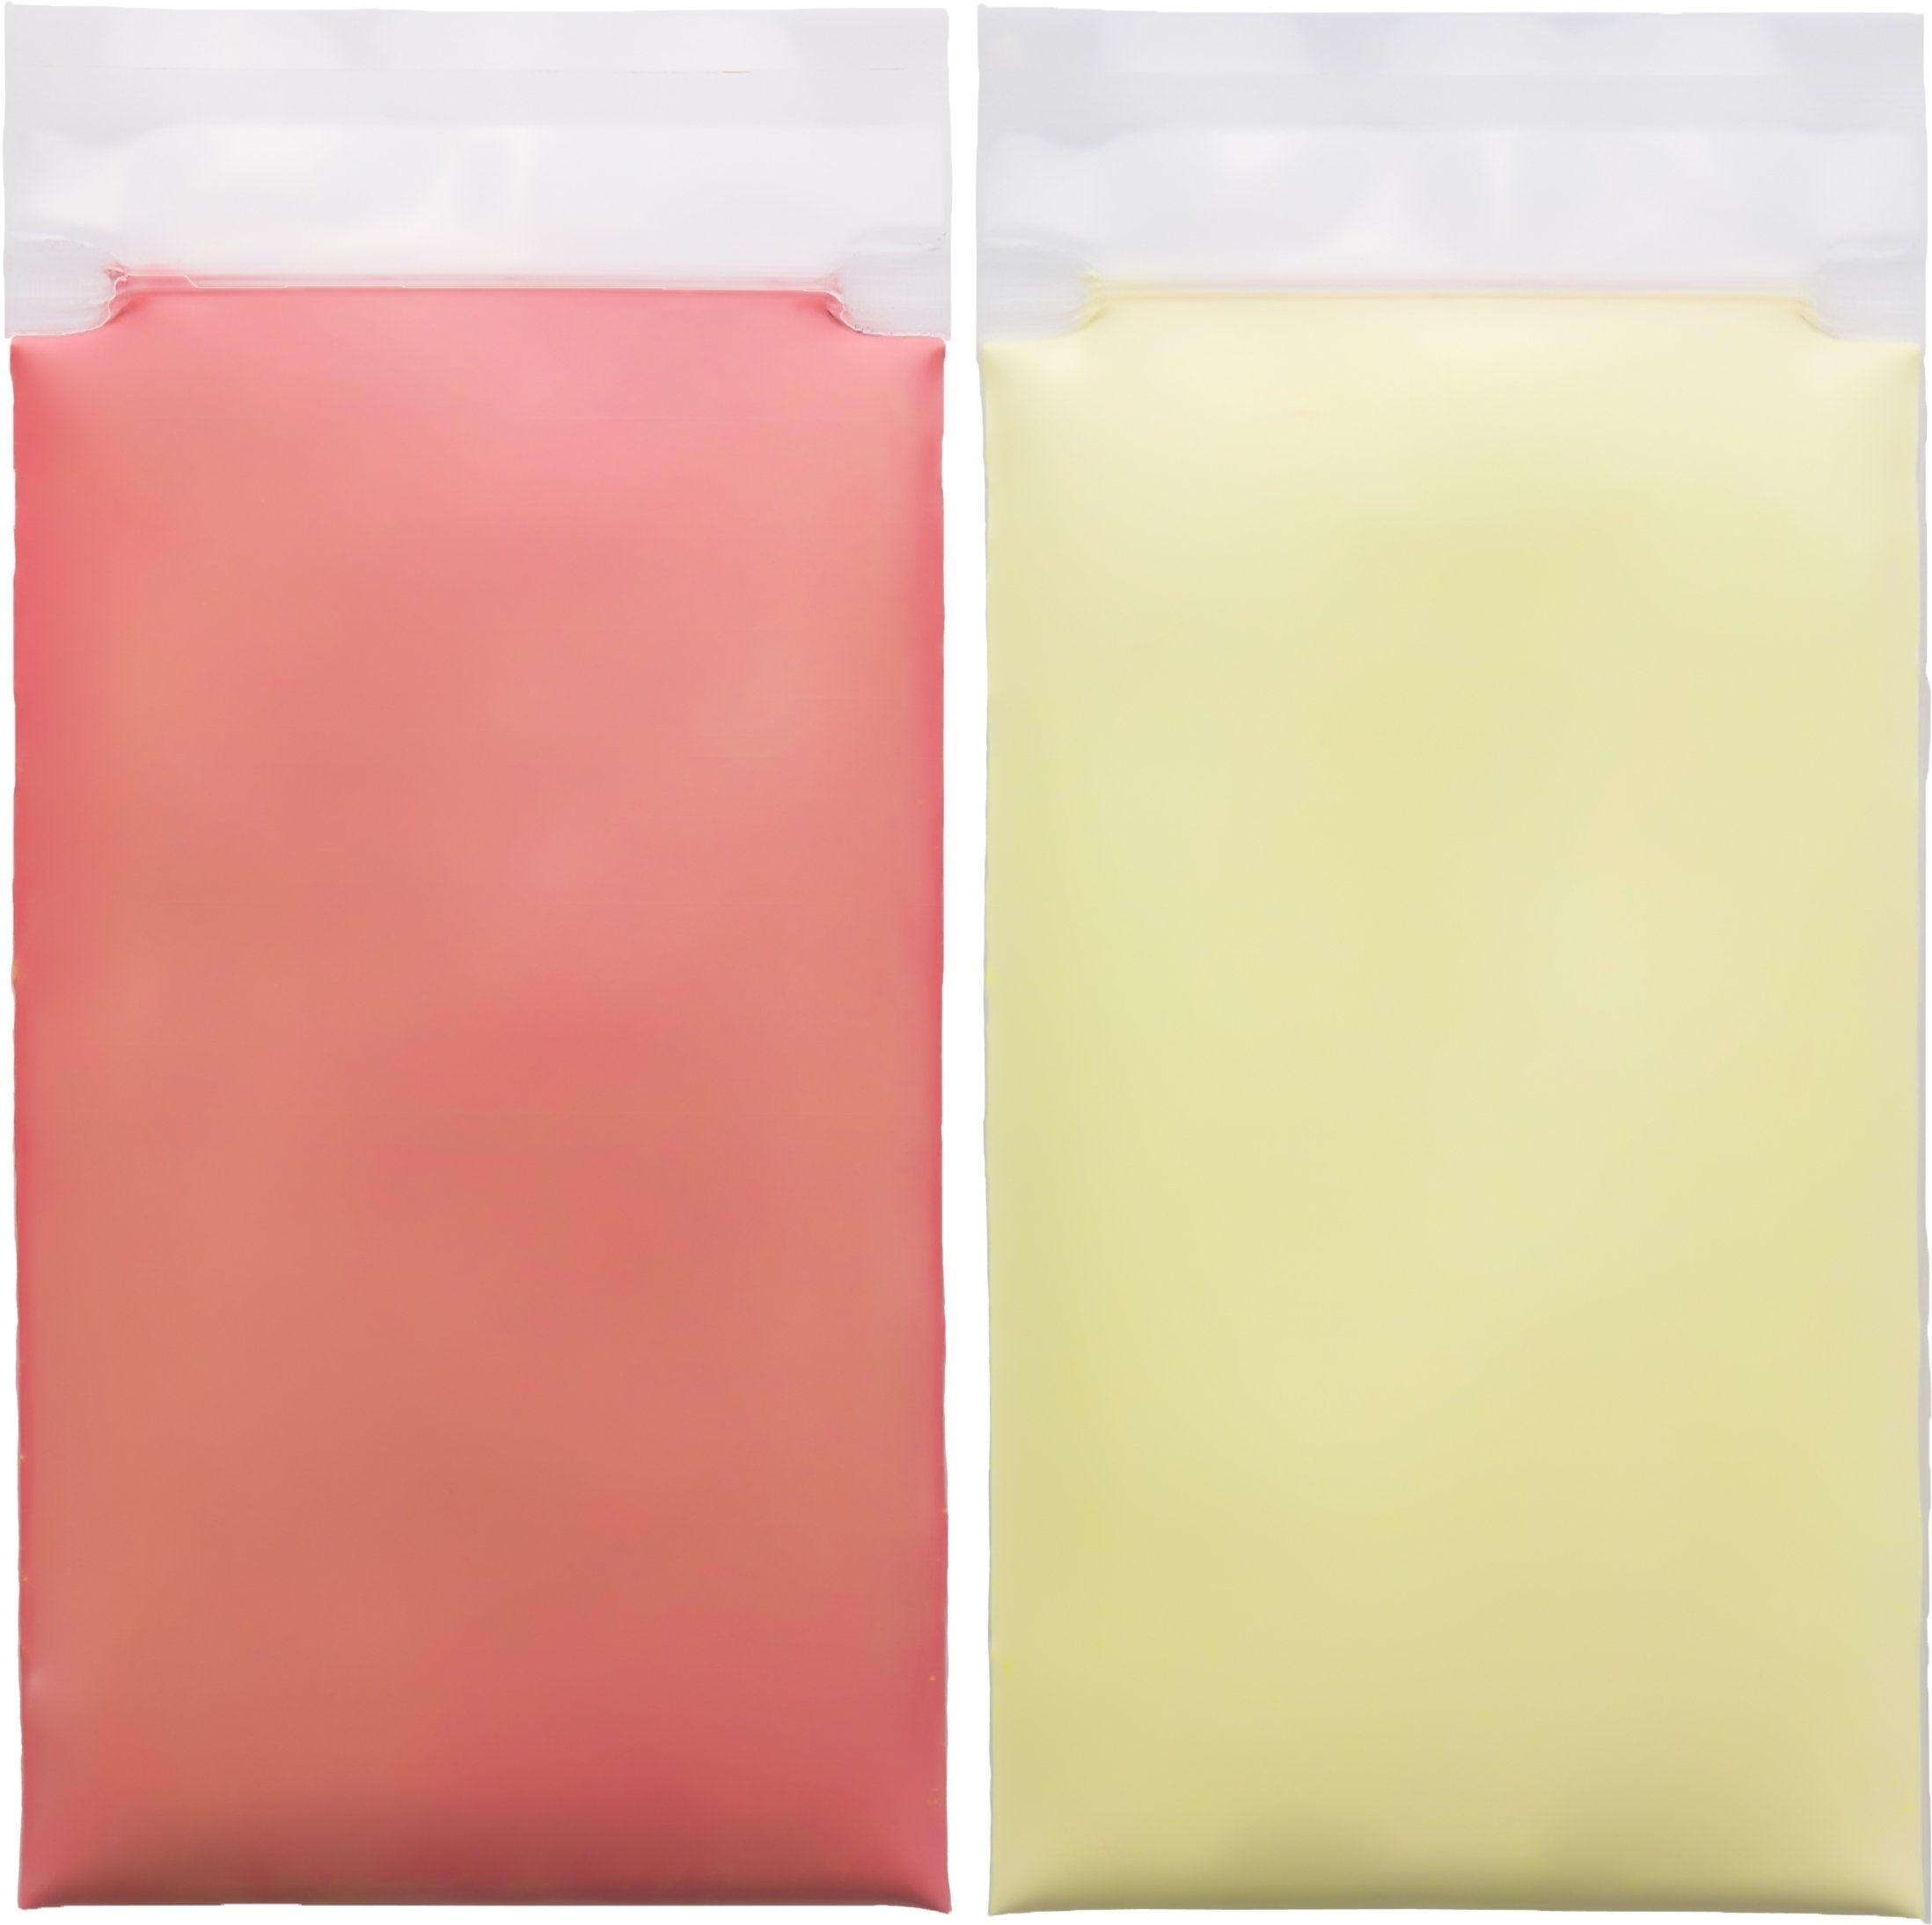 31°C 11 Colors thermochromic pigments powder temperature sensitive color  changed paints for plastics, cosmetics